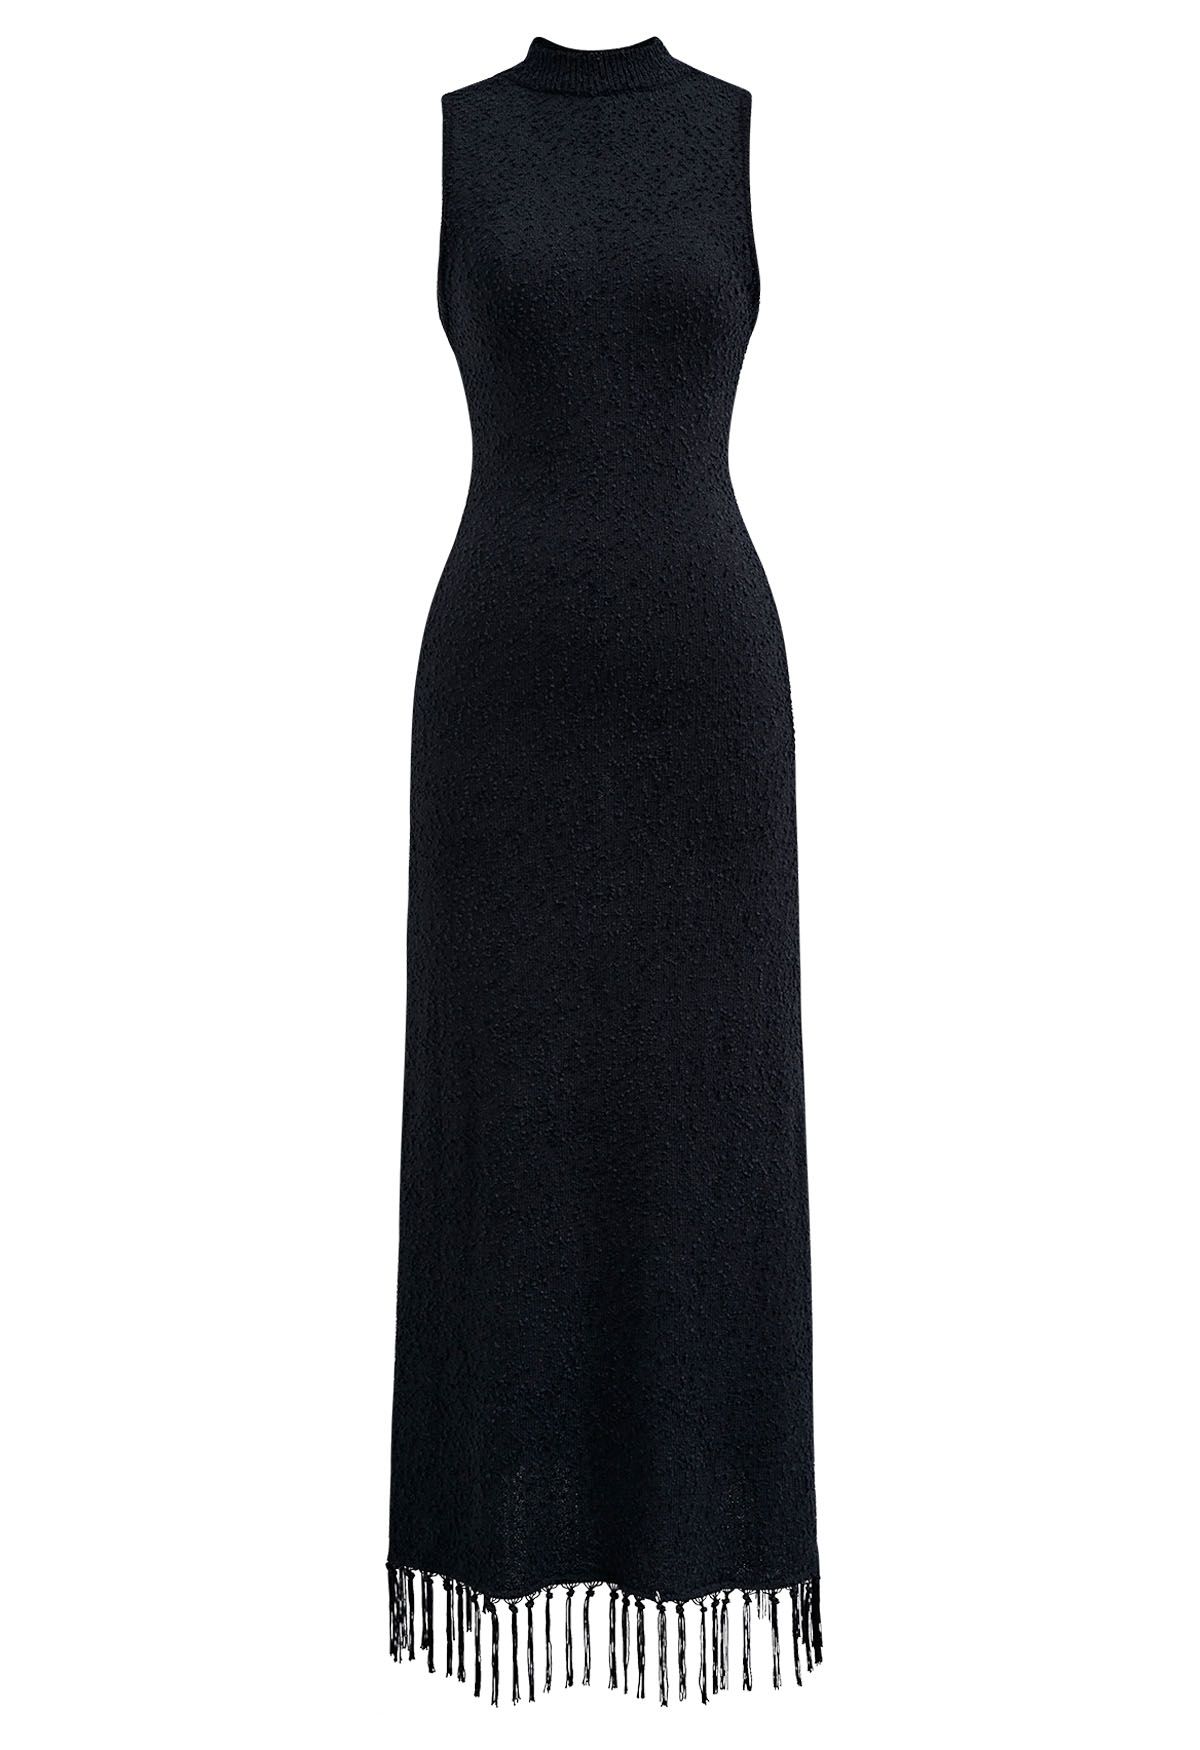 Fringed Texture Knit Sleeveless Maxi Dress in Black